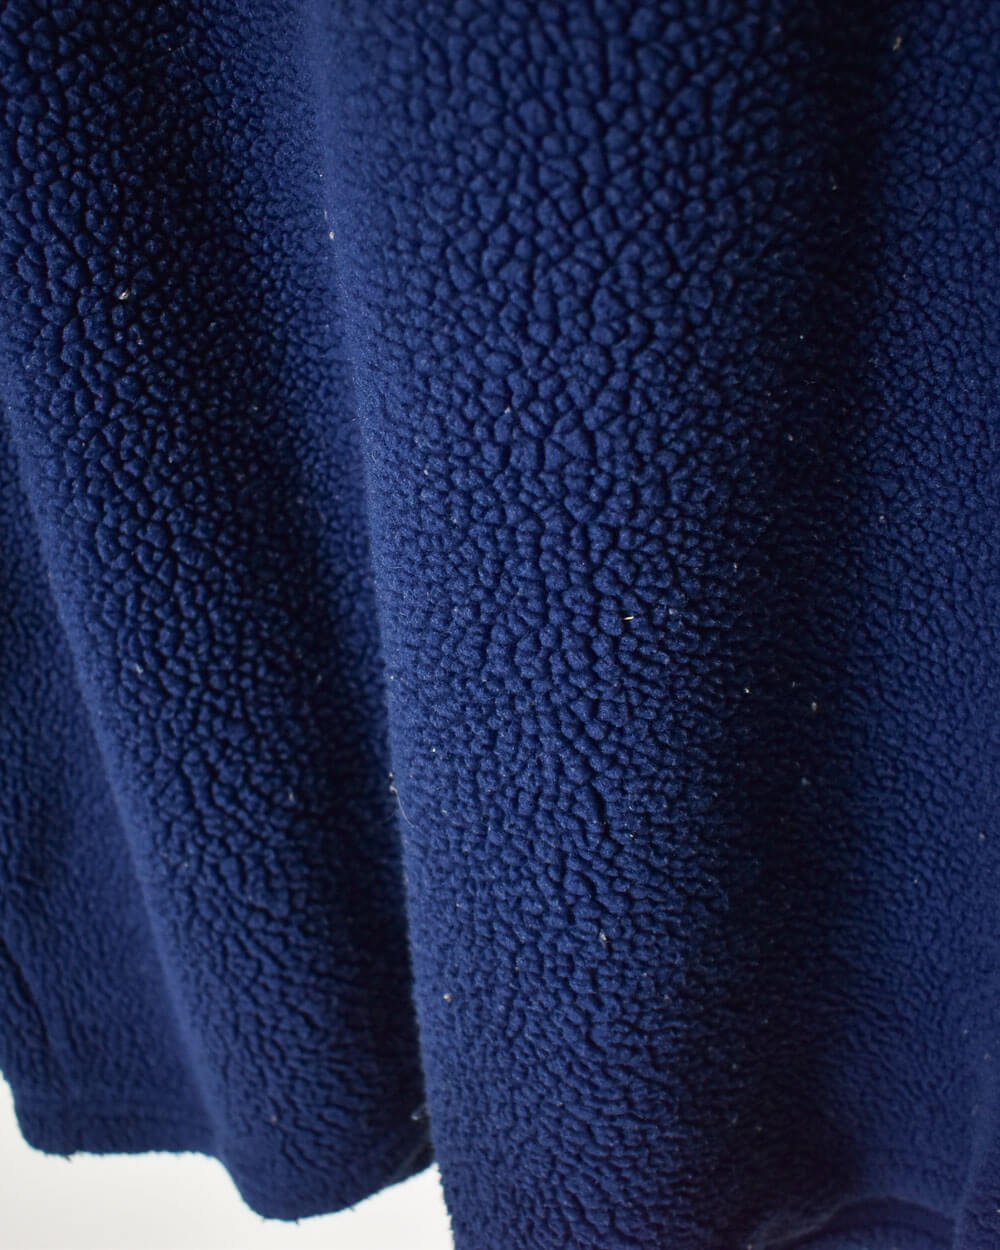 Navy Adidas 1/4 Zip Colour Block Fleece - Large